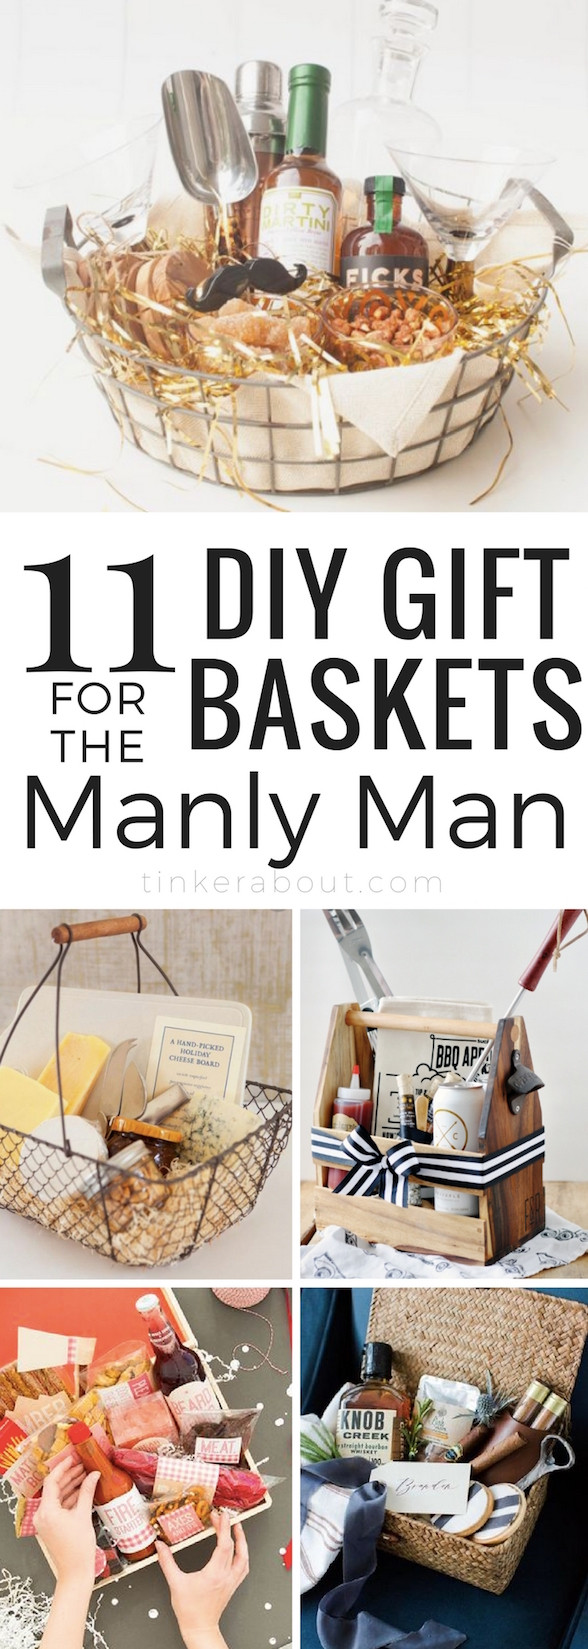 Gift Baskets Ideas For Men
 11 Best Gift Basket Ideas For Him